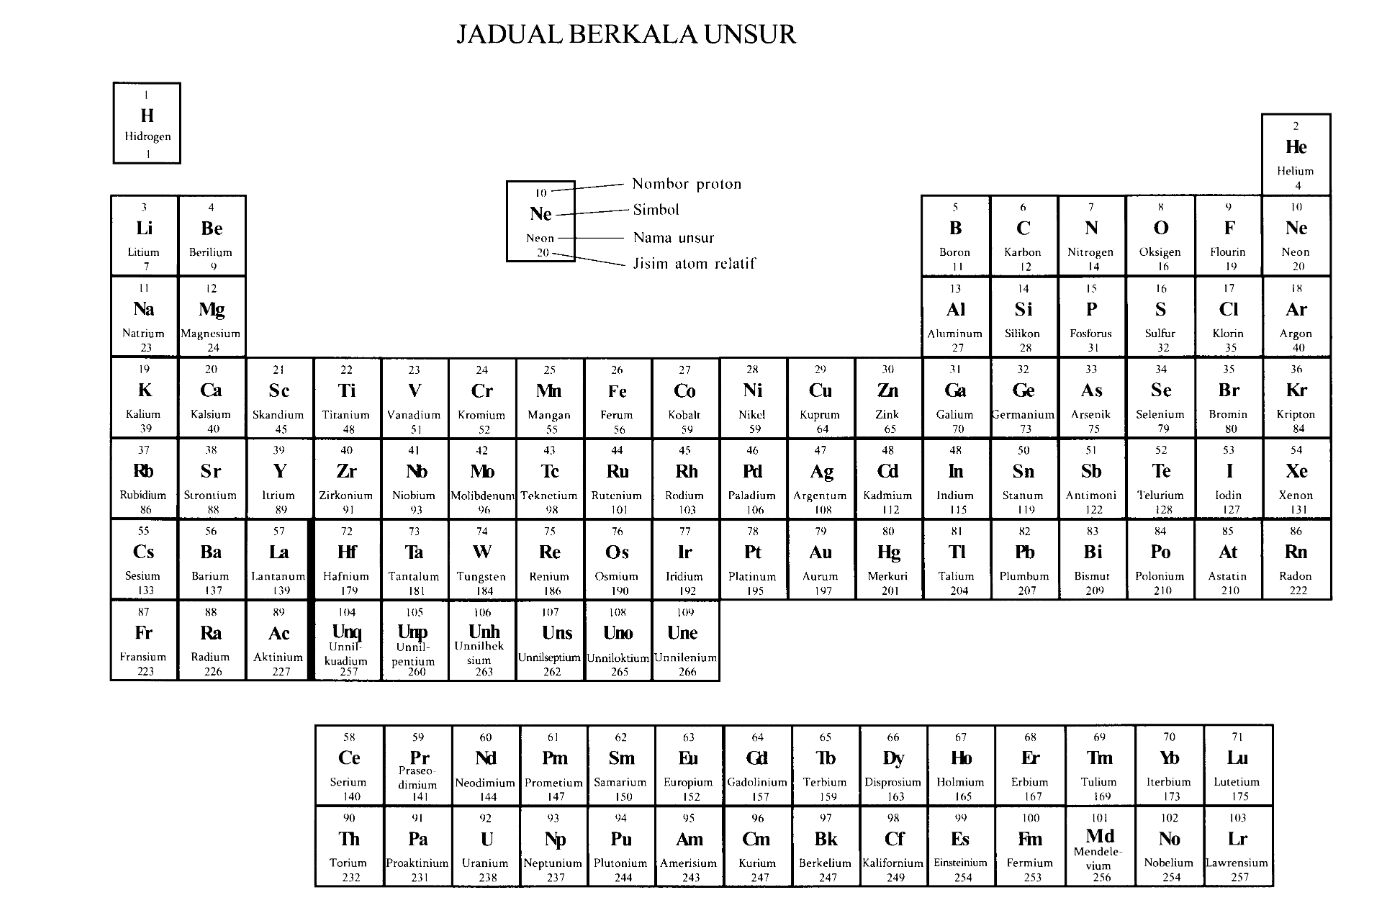 Jadual Berkala Unsur Malaysia Periodic Table Of The Elements